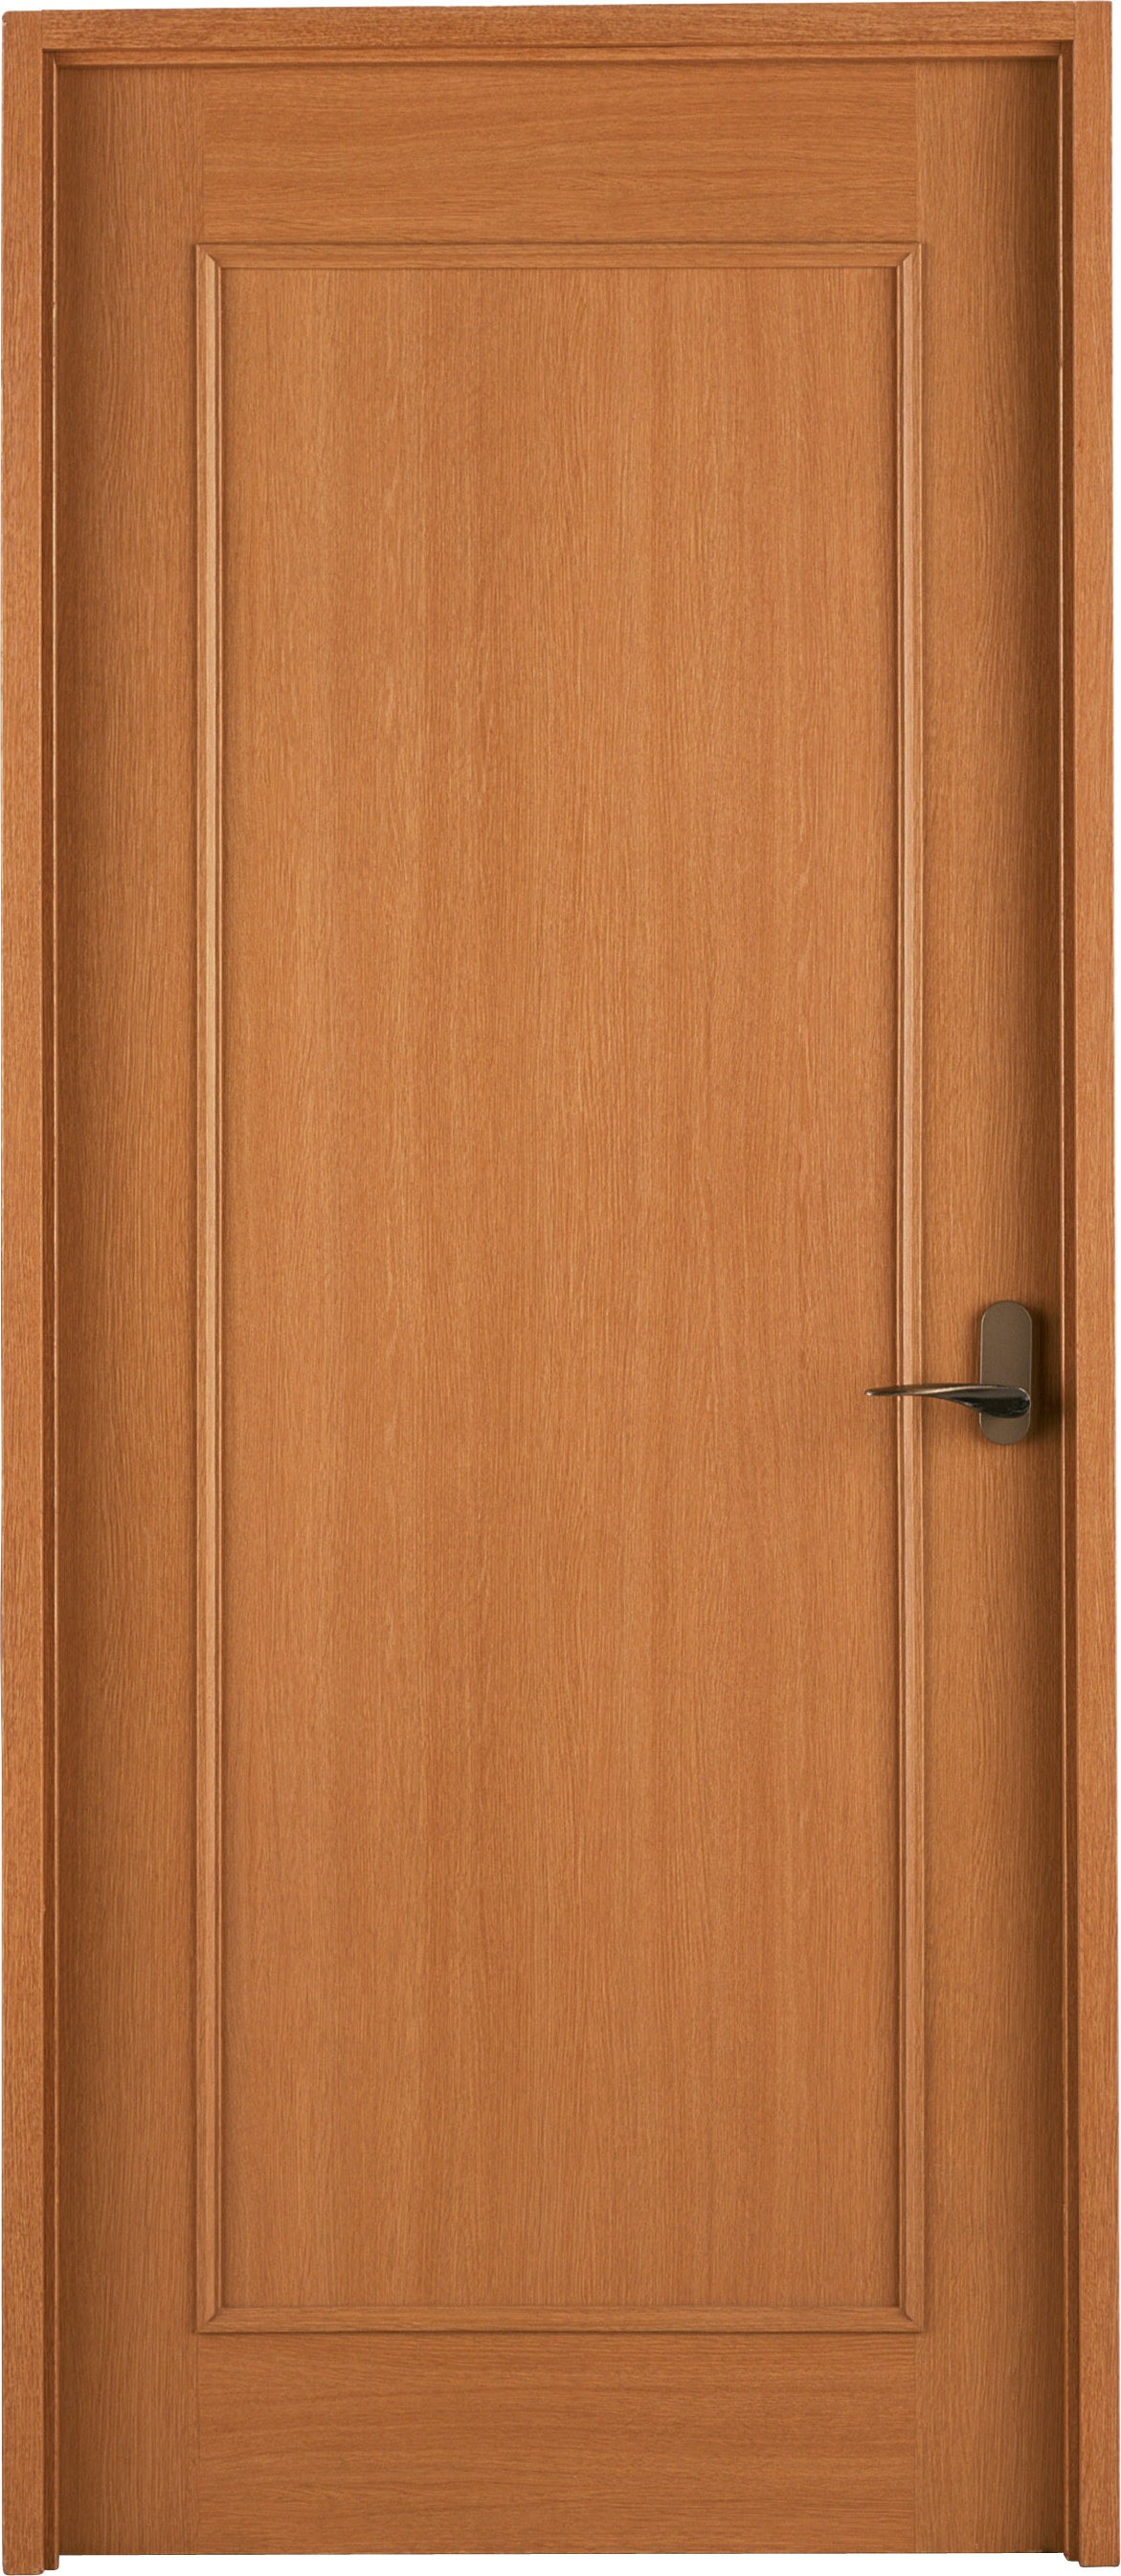 Exterior puerta de madera PNG imagen Transparente